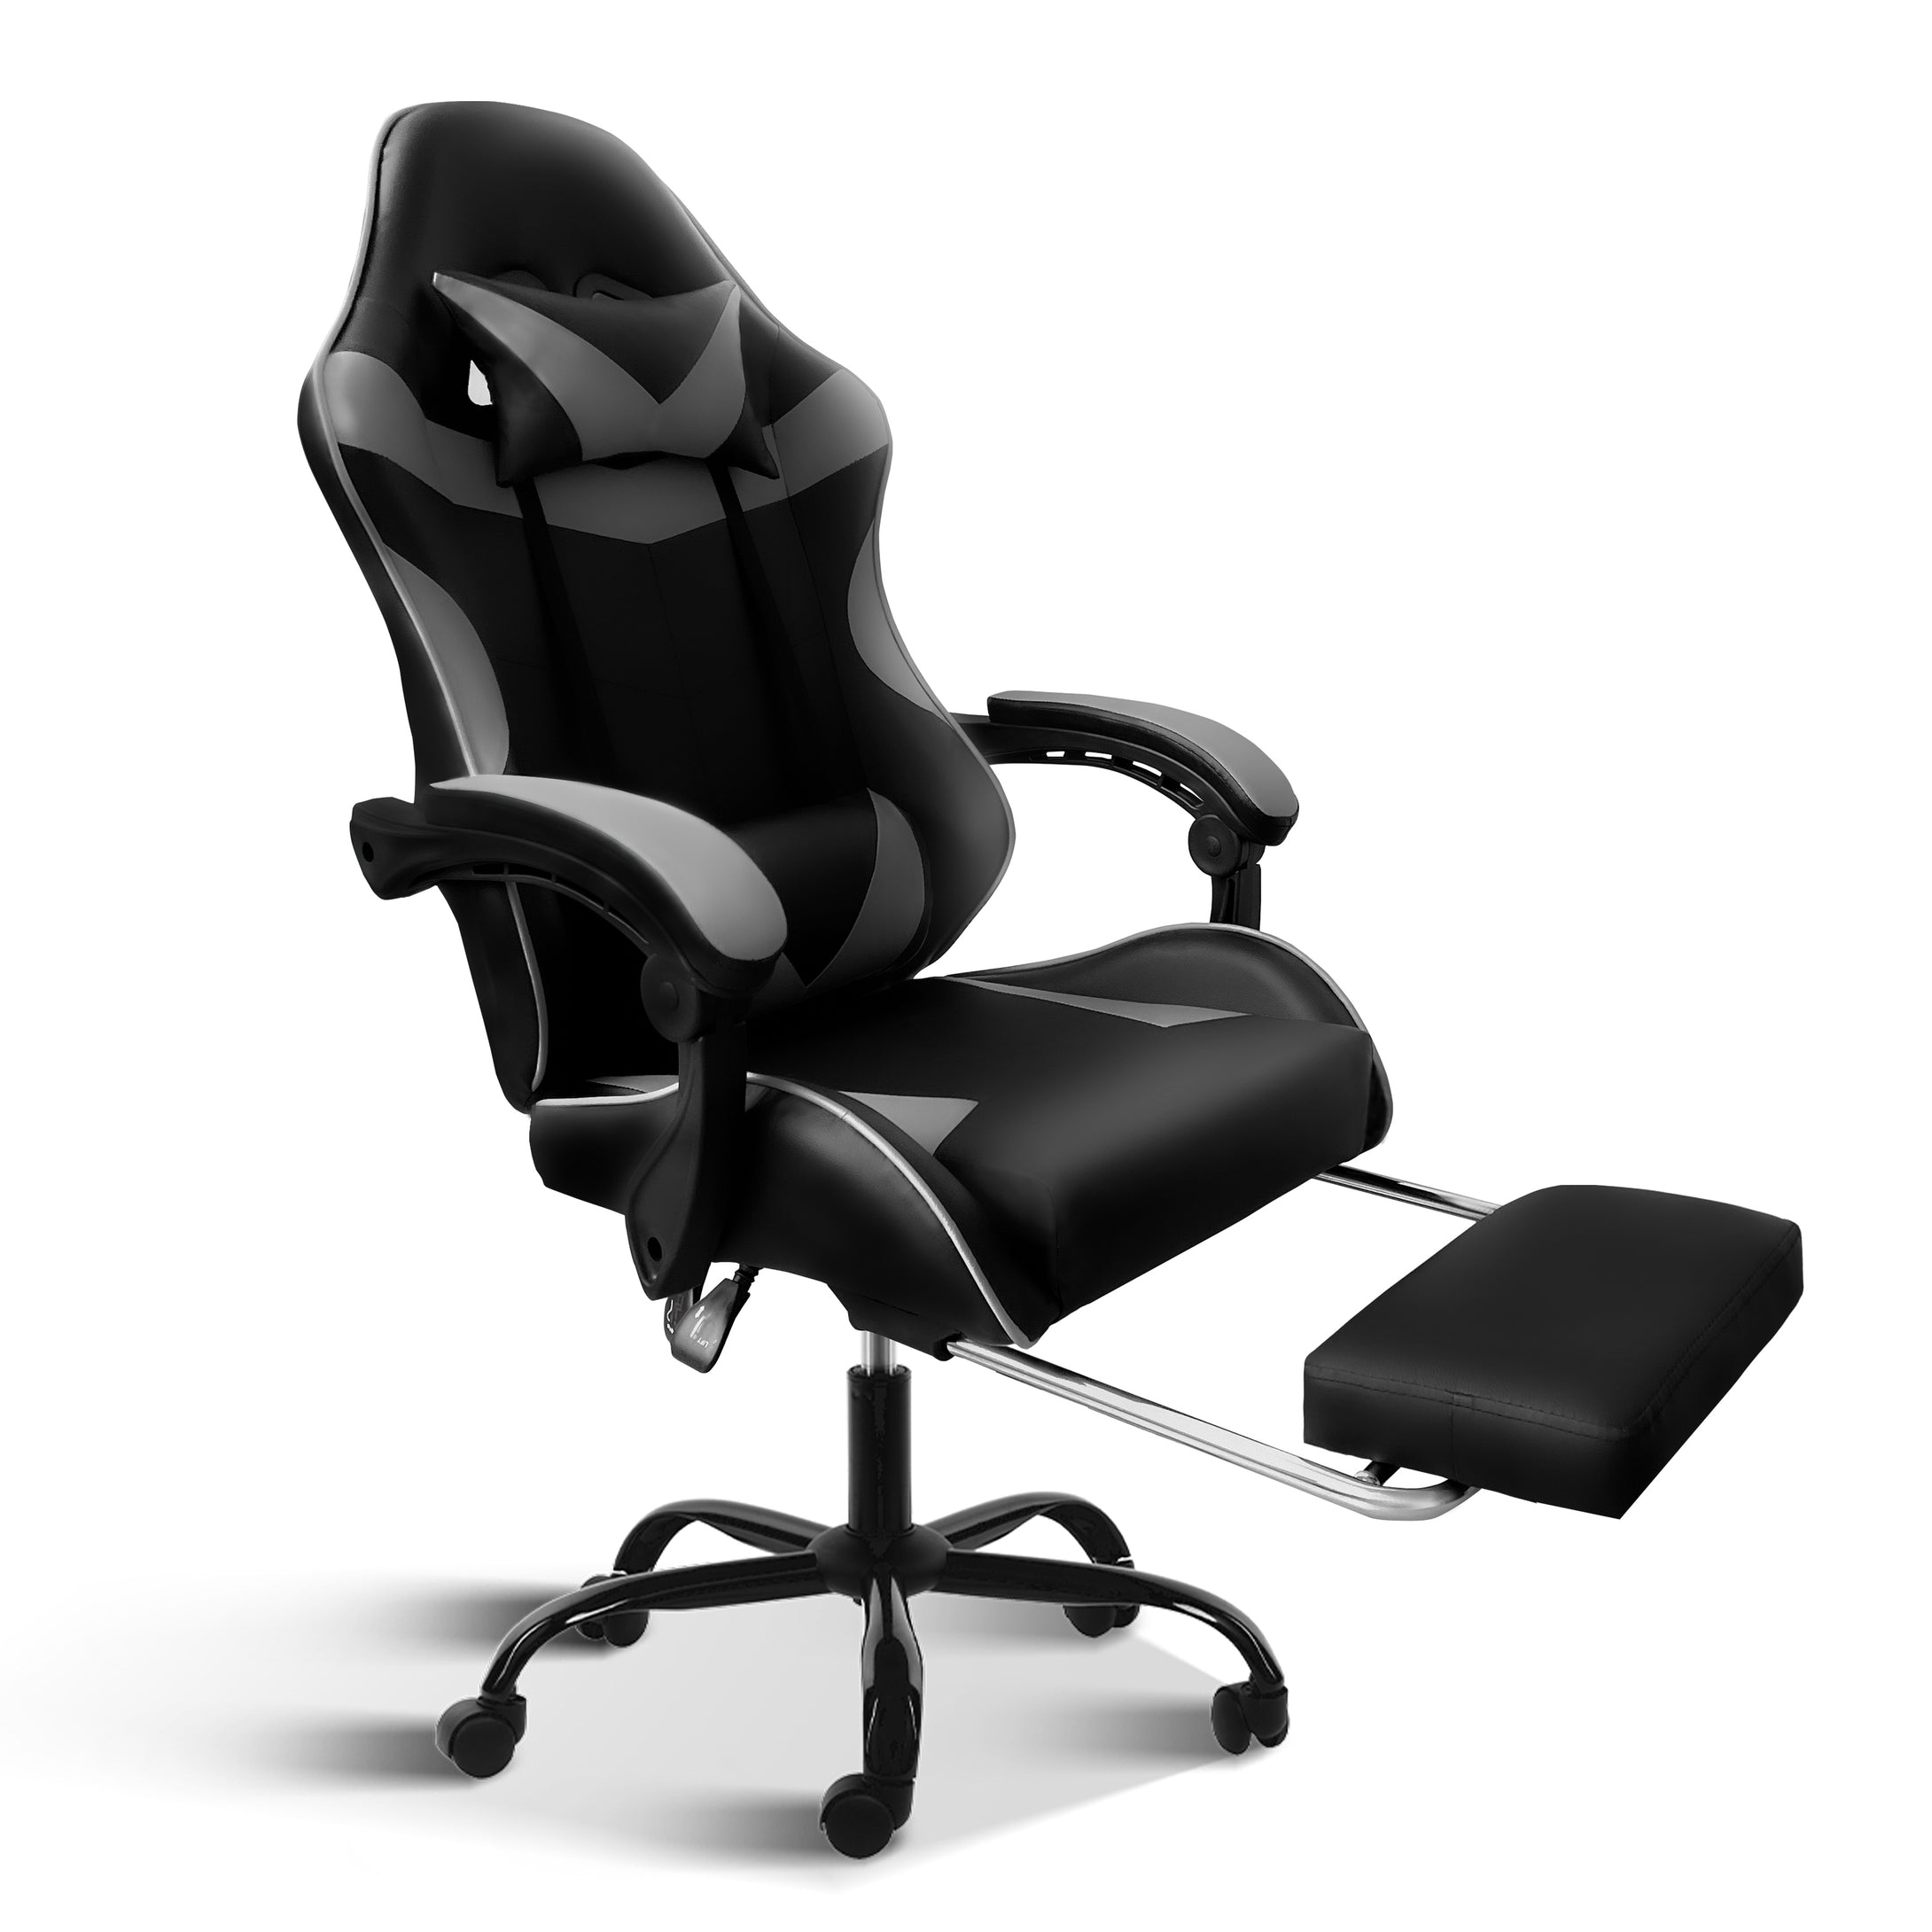 YSSOA Respaldo y asiento reclinable de altura estilo carrera para juegos, oficina, computadora con respaldo alto, silla giratoria ergonómica ajustable con reposapiés (negro y gris)